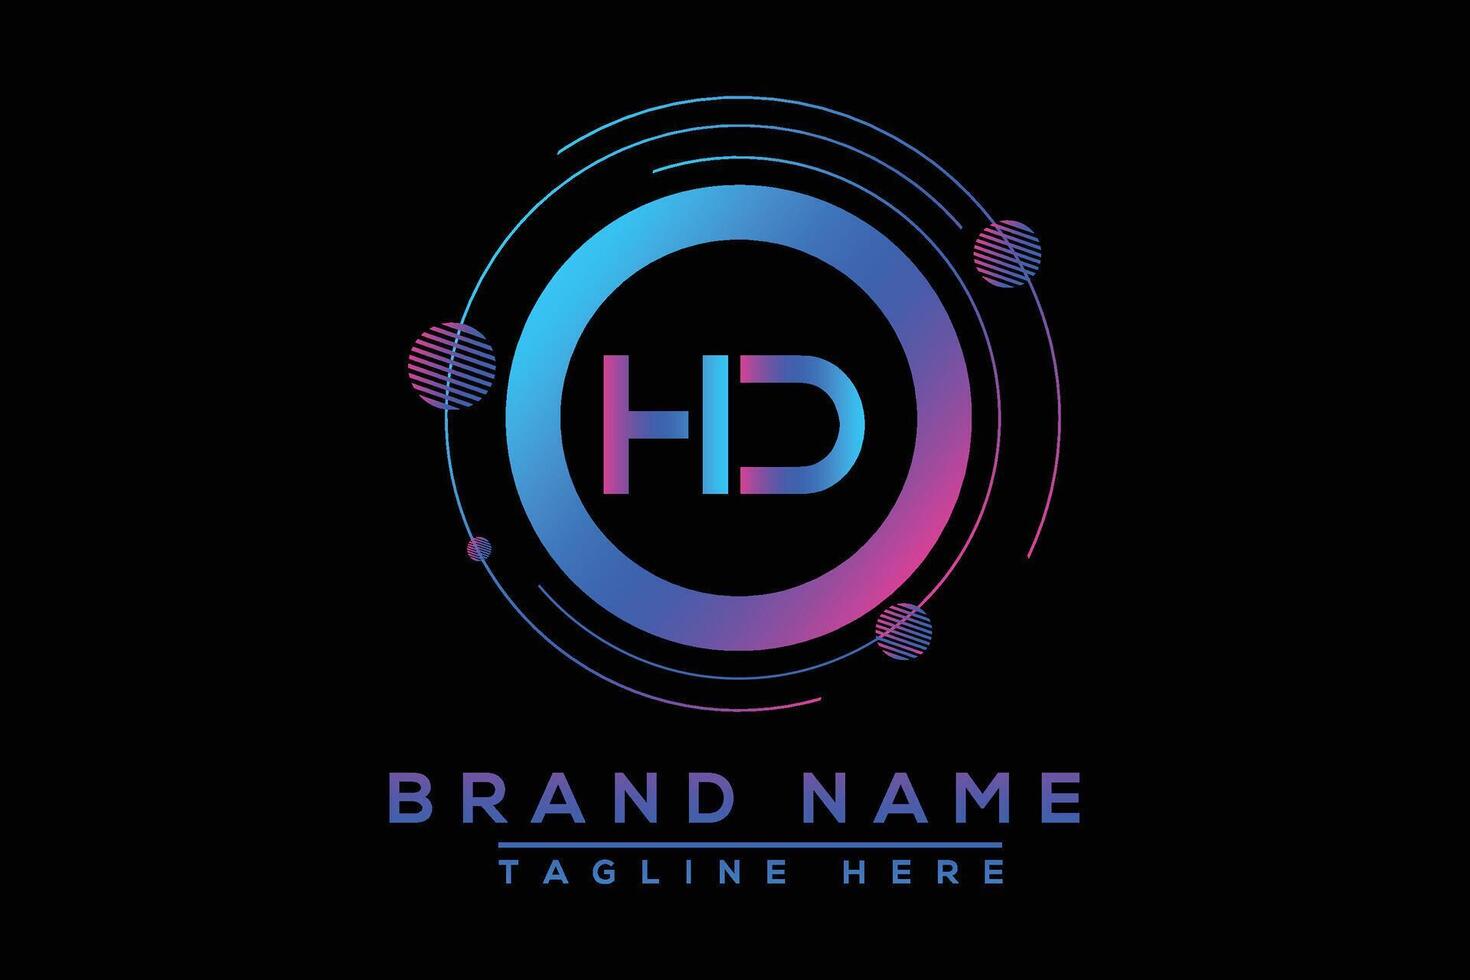 HD letter logo design. Vector logo design for business.